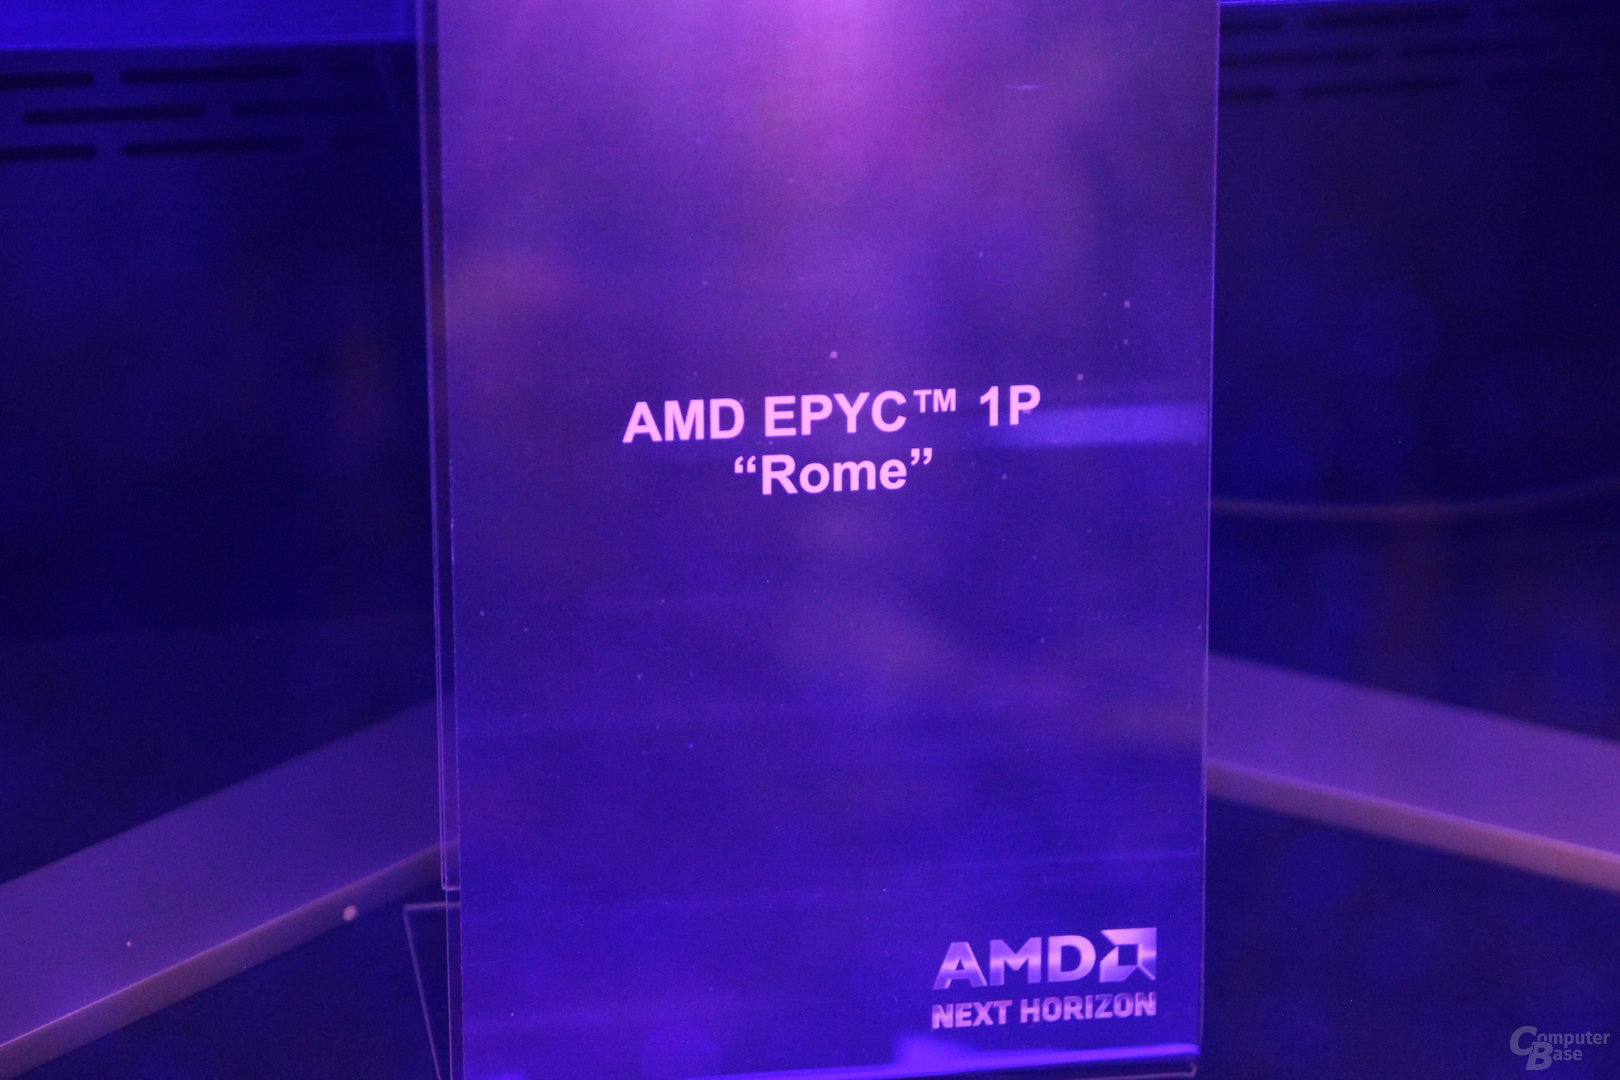 AMD Rome